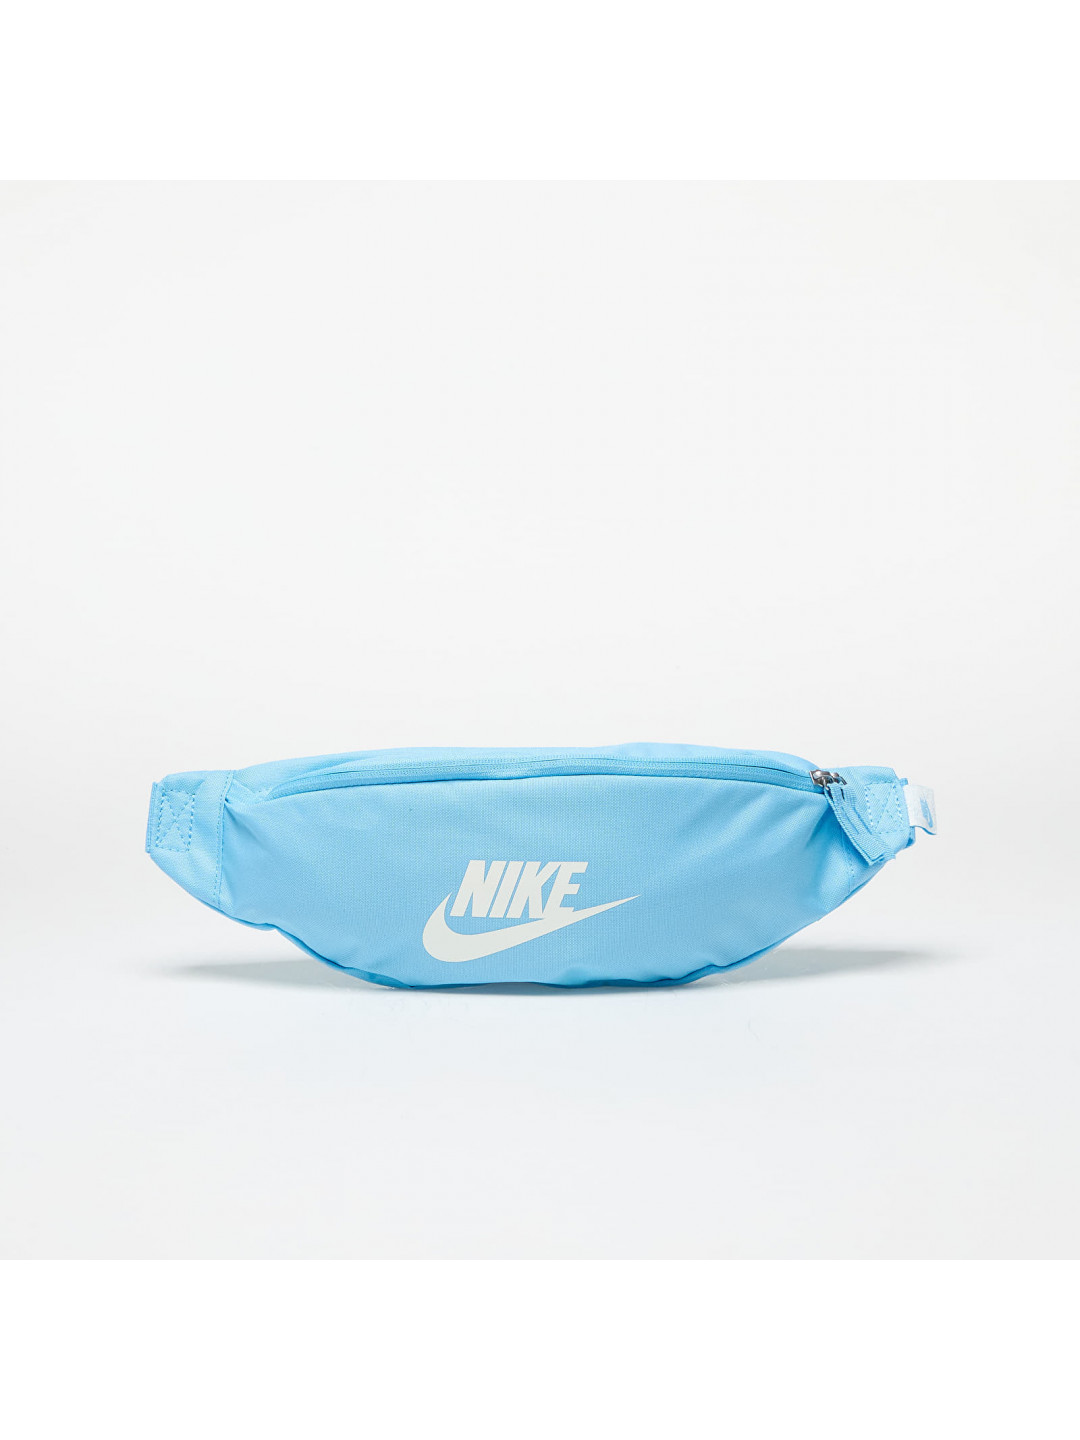 Nike Heritage Waistpack Aquarius Blue White